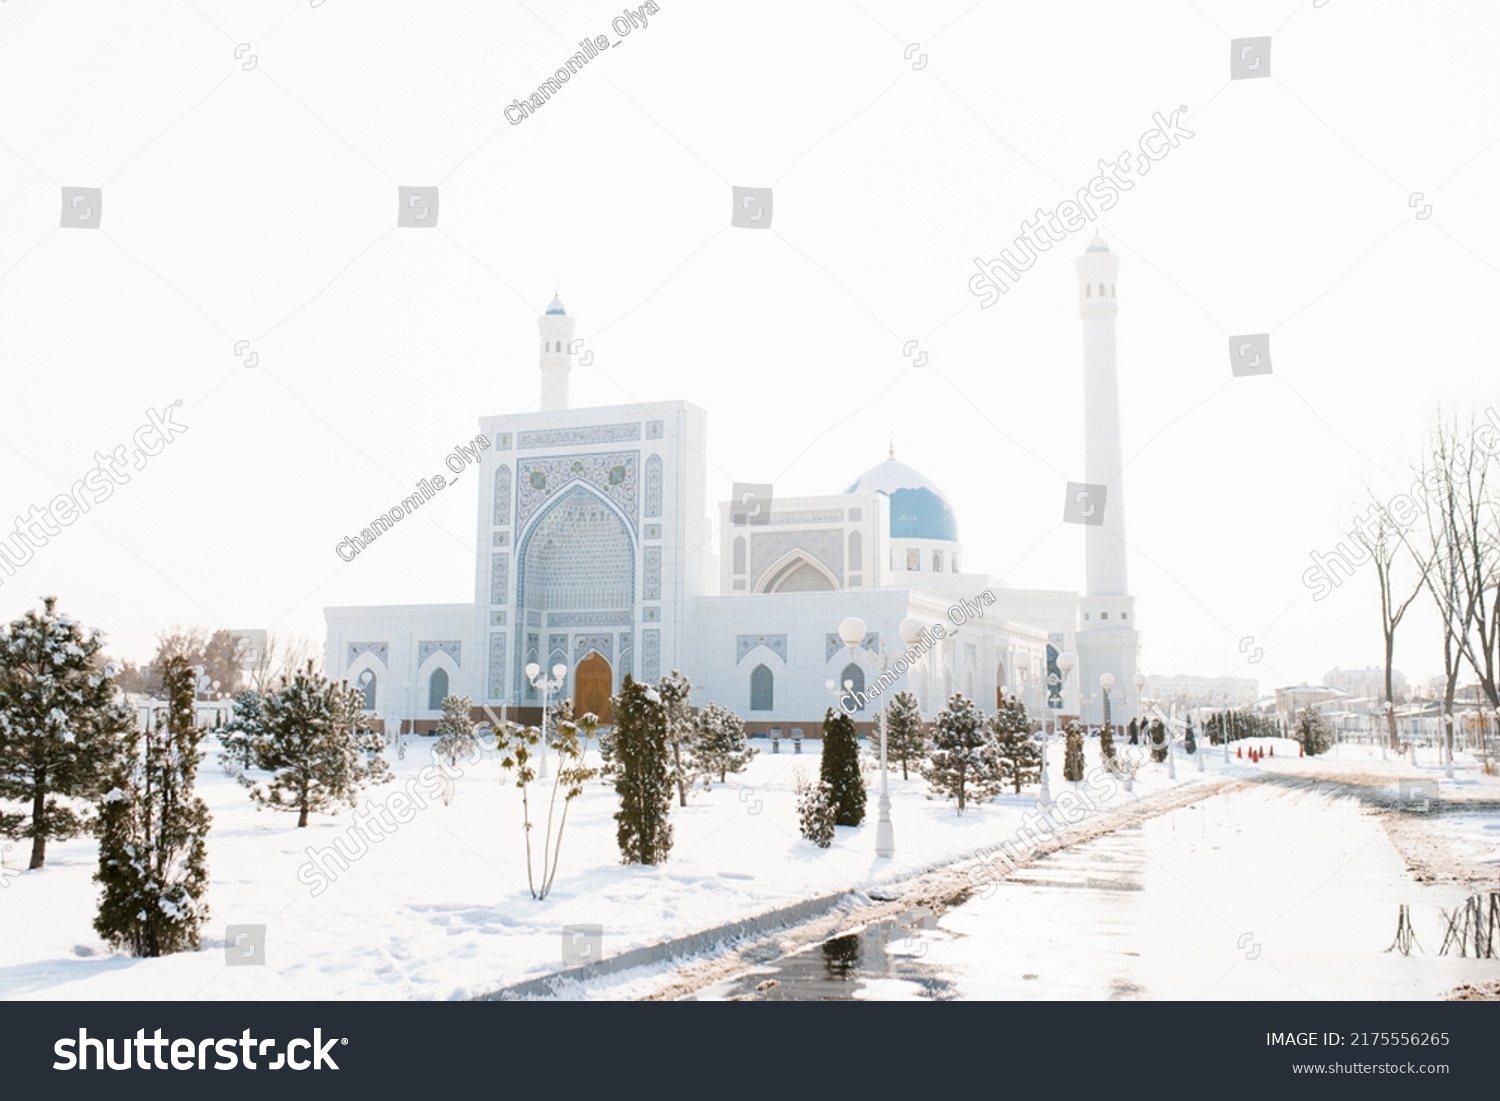 1,054 Uzbekistan Winter Stock Photos, Images & Photography | Shutterstock